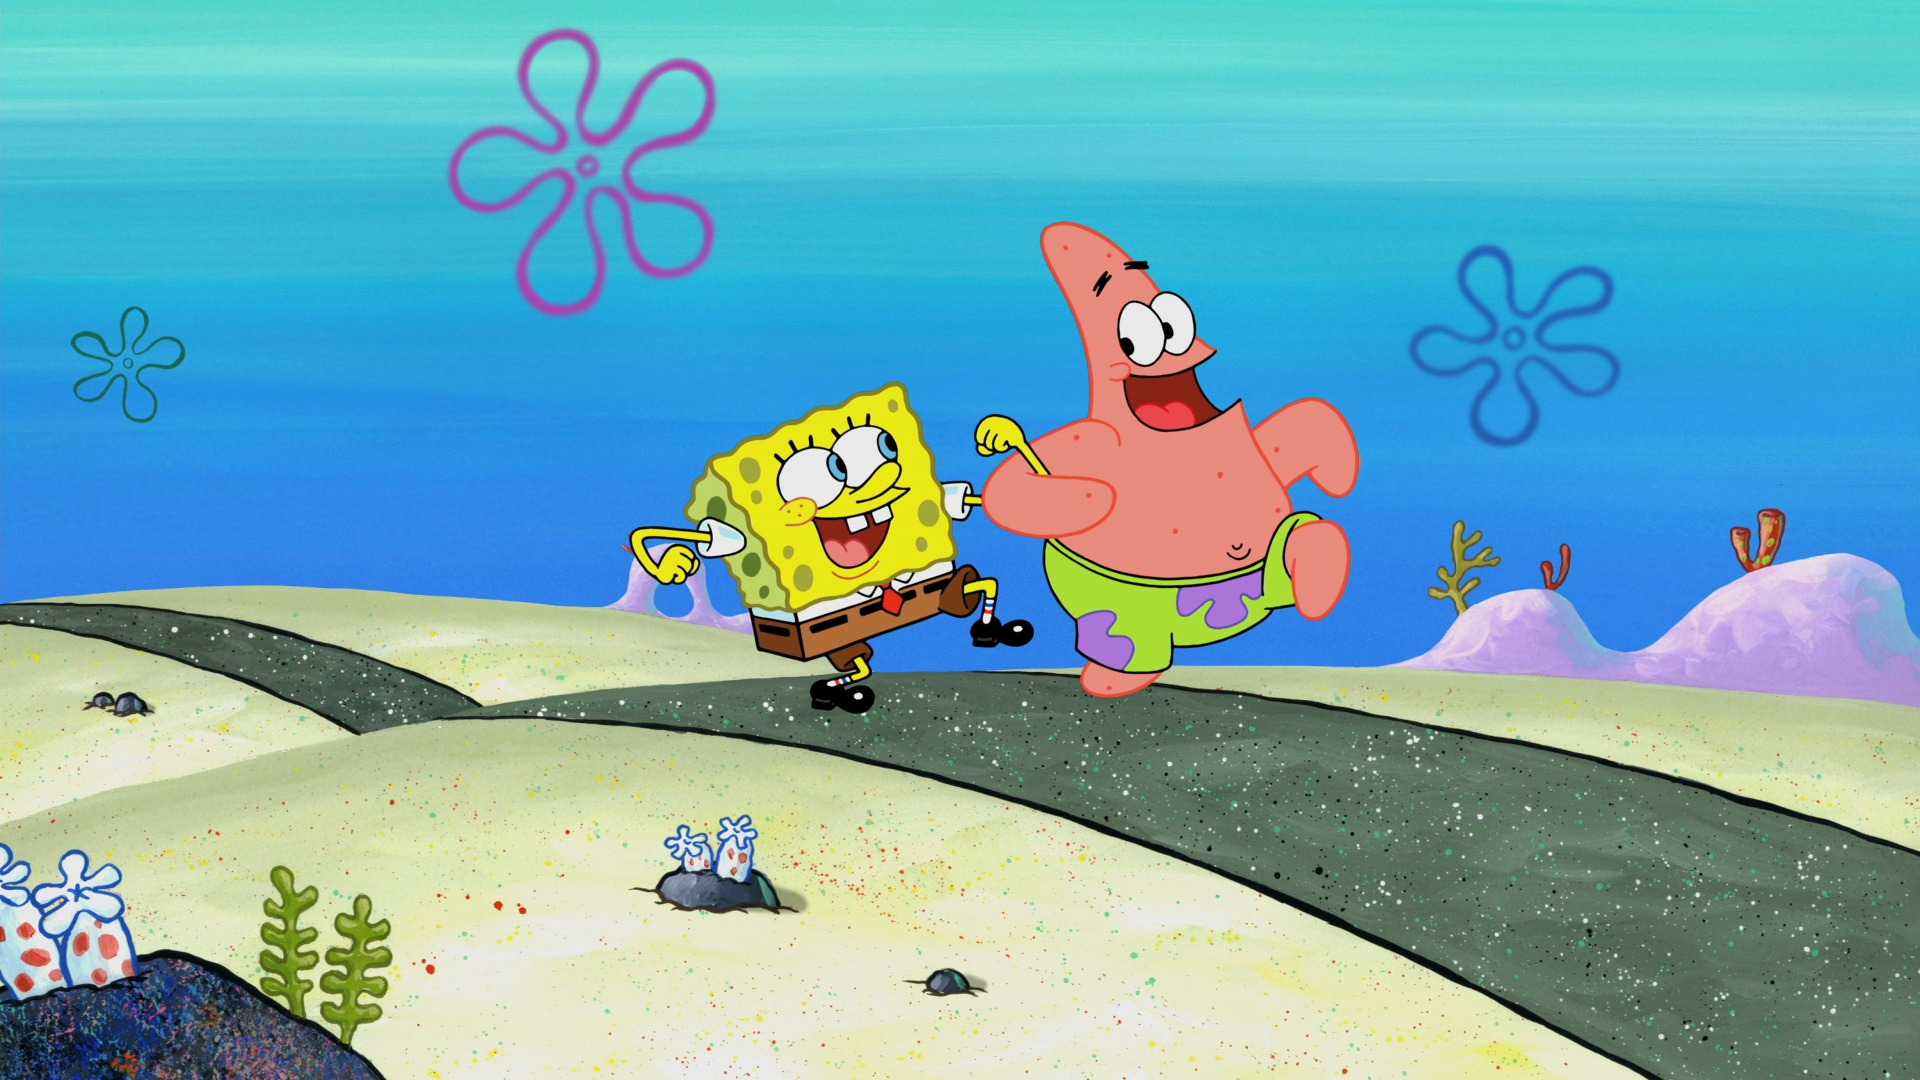 spongebob season 12 krusty krab kiss cartoon